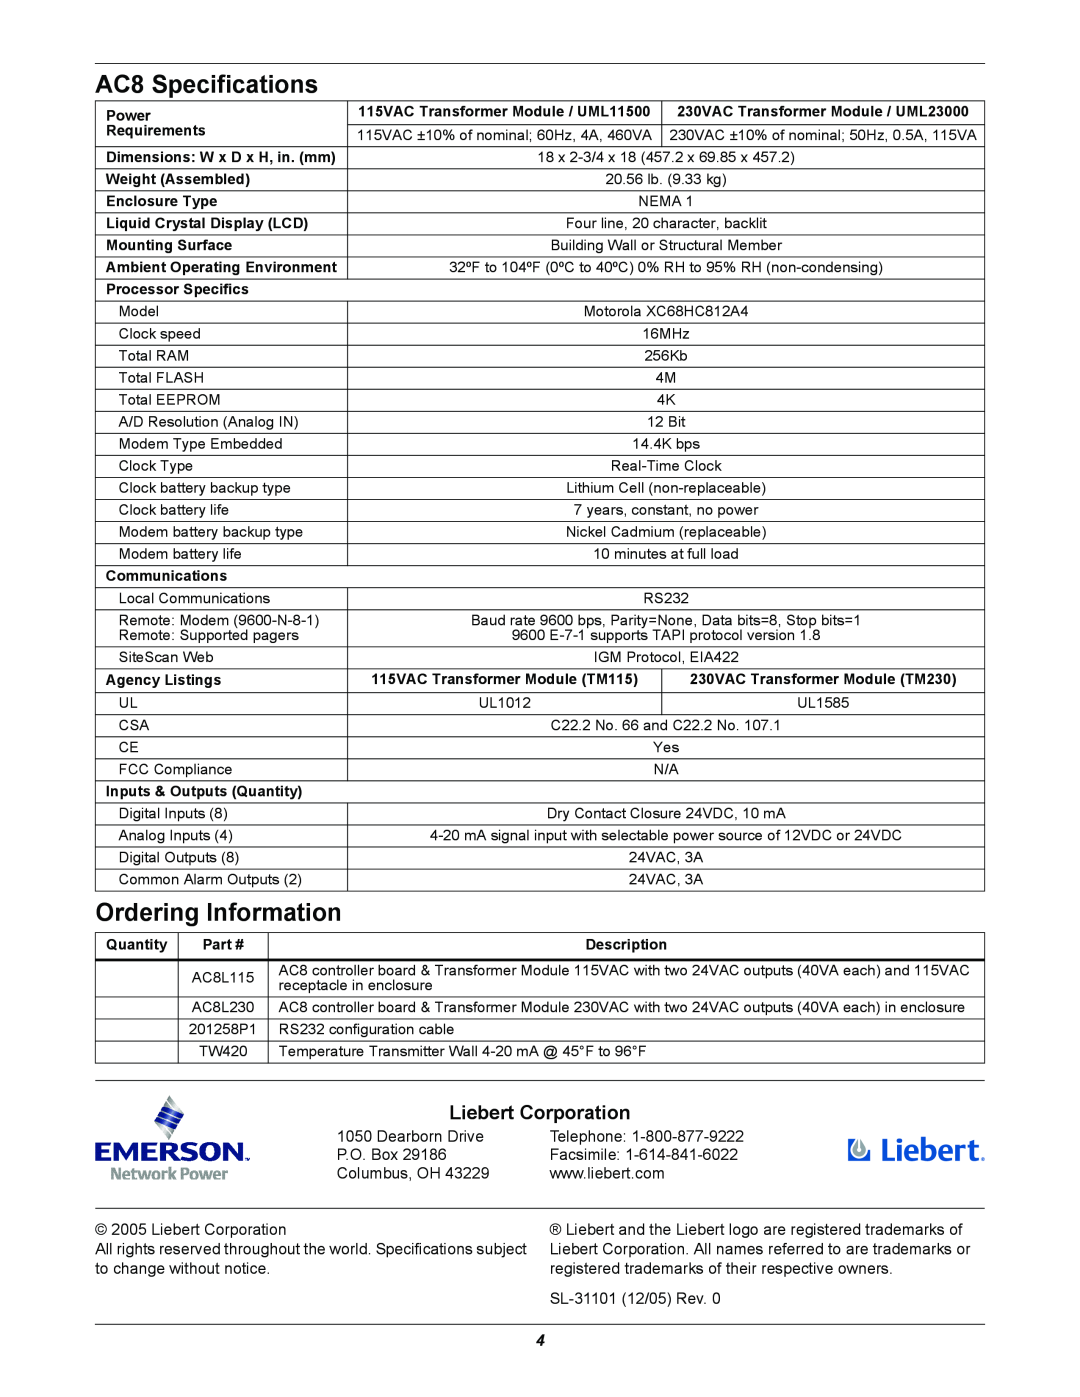 Liebert AC8 Specifications, Ordering Information, Liebert Corporation, Dearborn Drive, Telephone, P.O. Box, Facsimile 